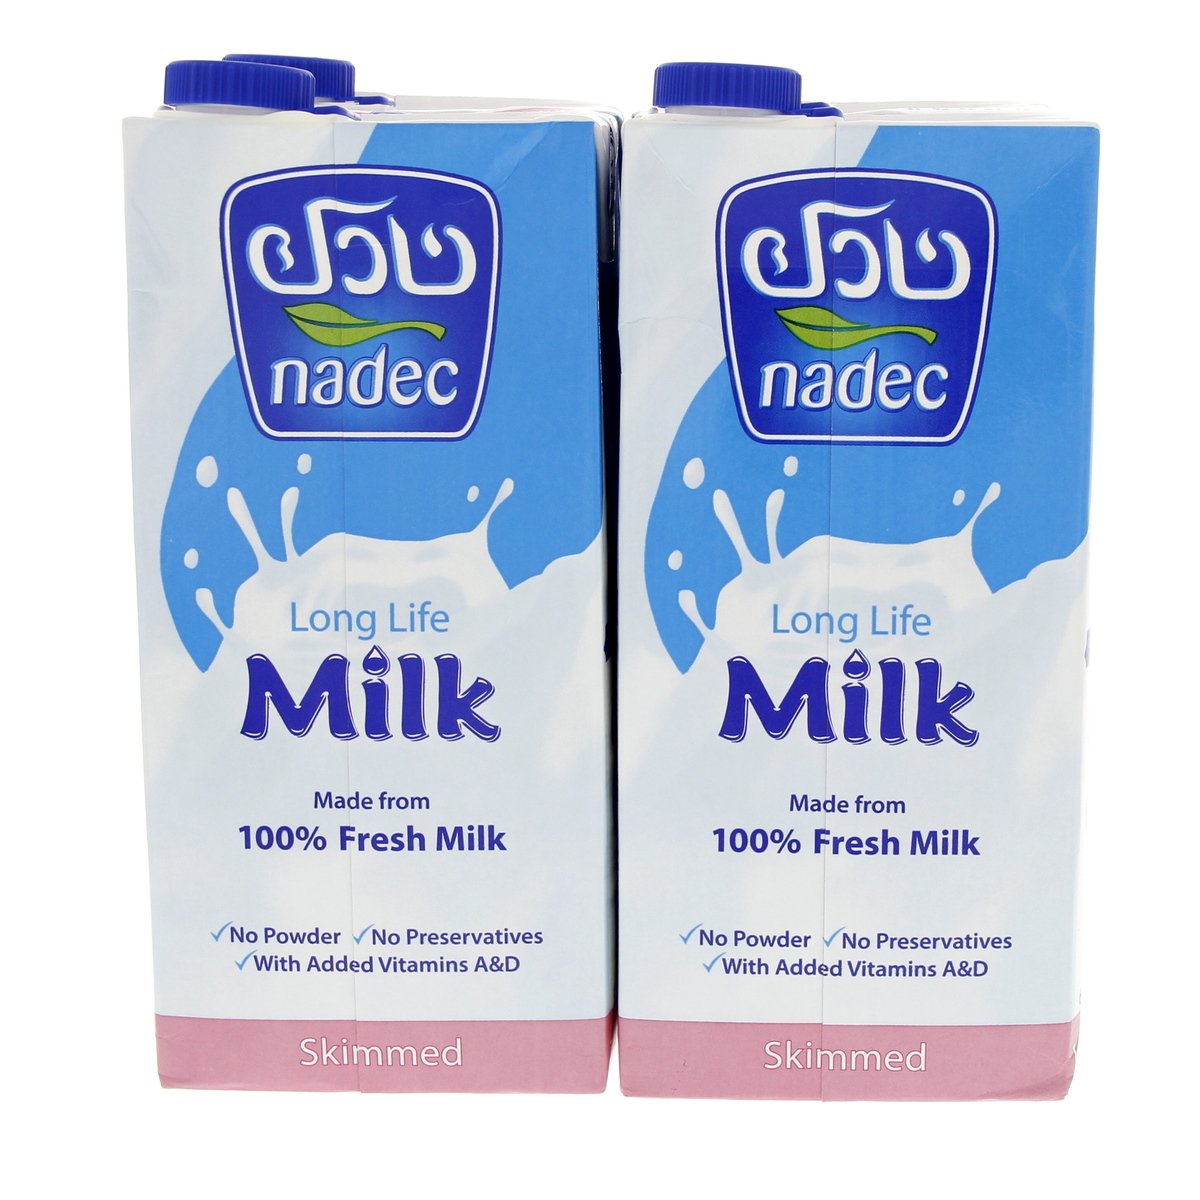 Nadec Long Life Skimmed Milk 12 x 1Litre